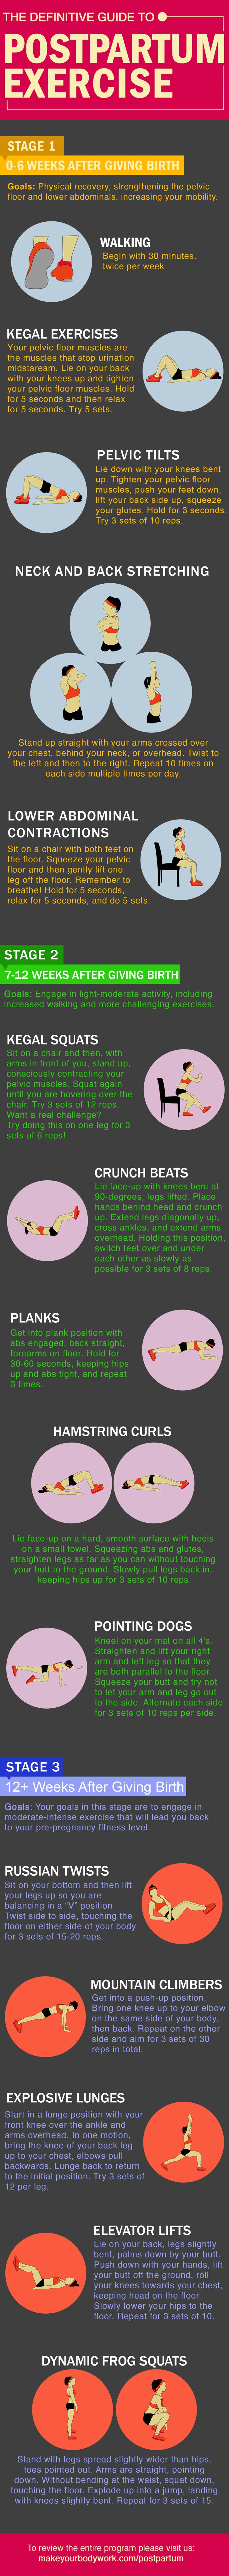 Postpartum Exercise Infographic